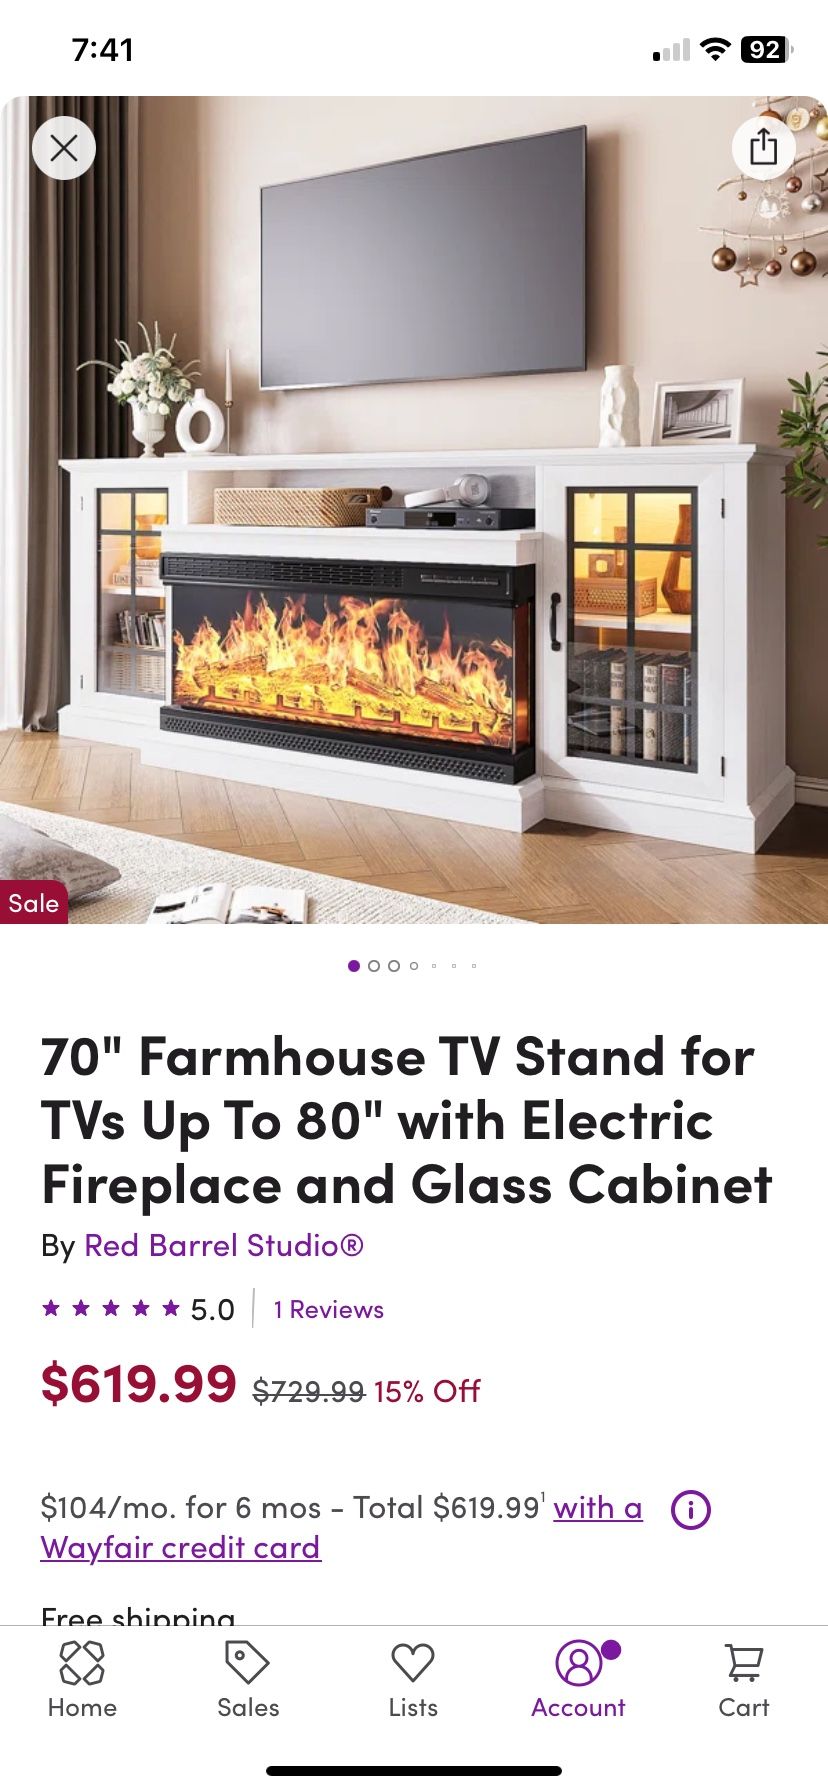 White Modern Farmhouse TV/Fireplace Stand